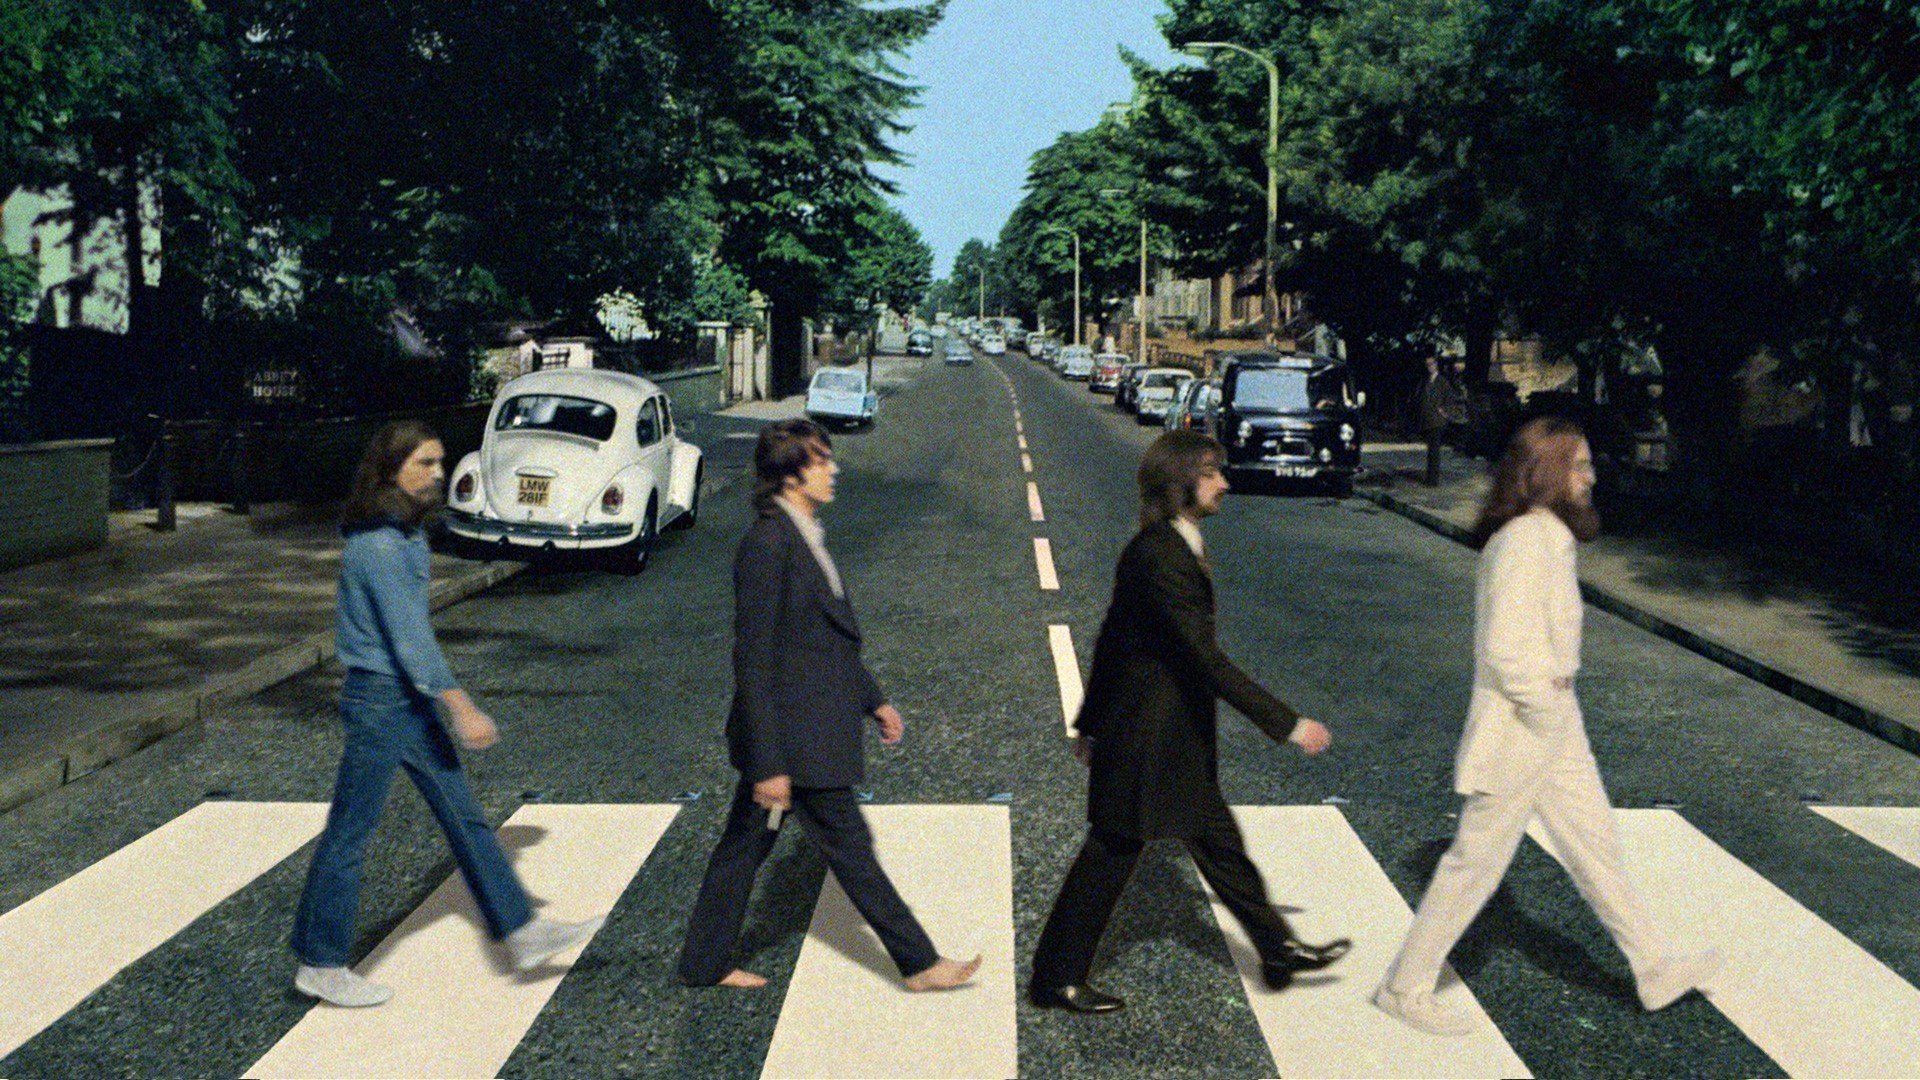 43+] Abbey Road Wallpaper - WallpaperSafari